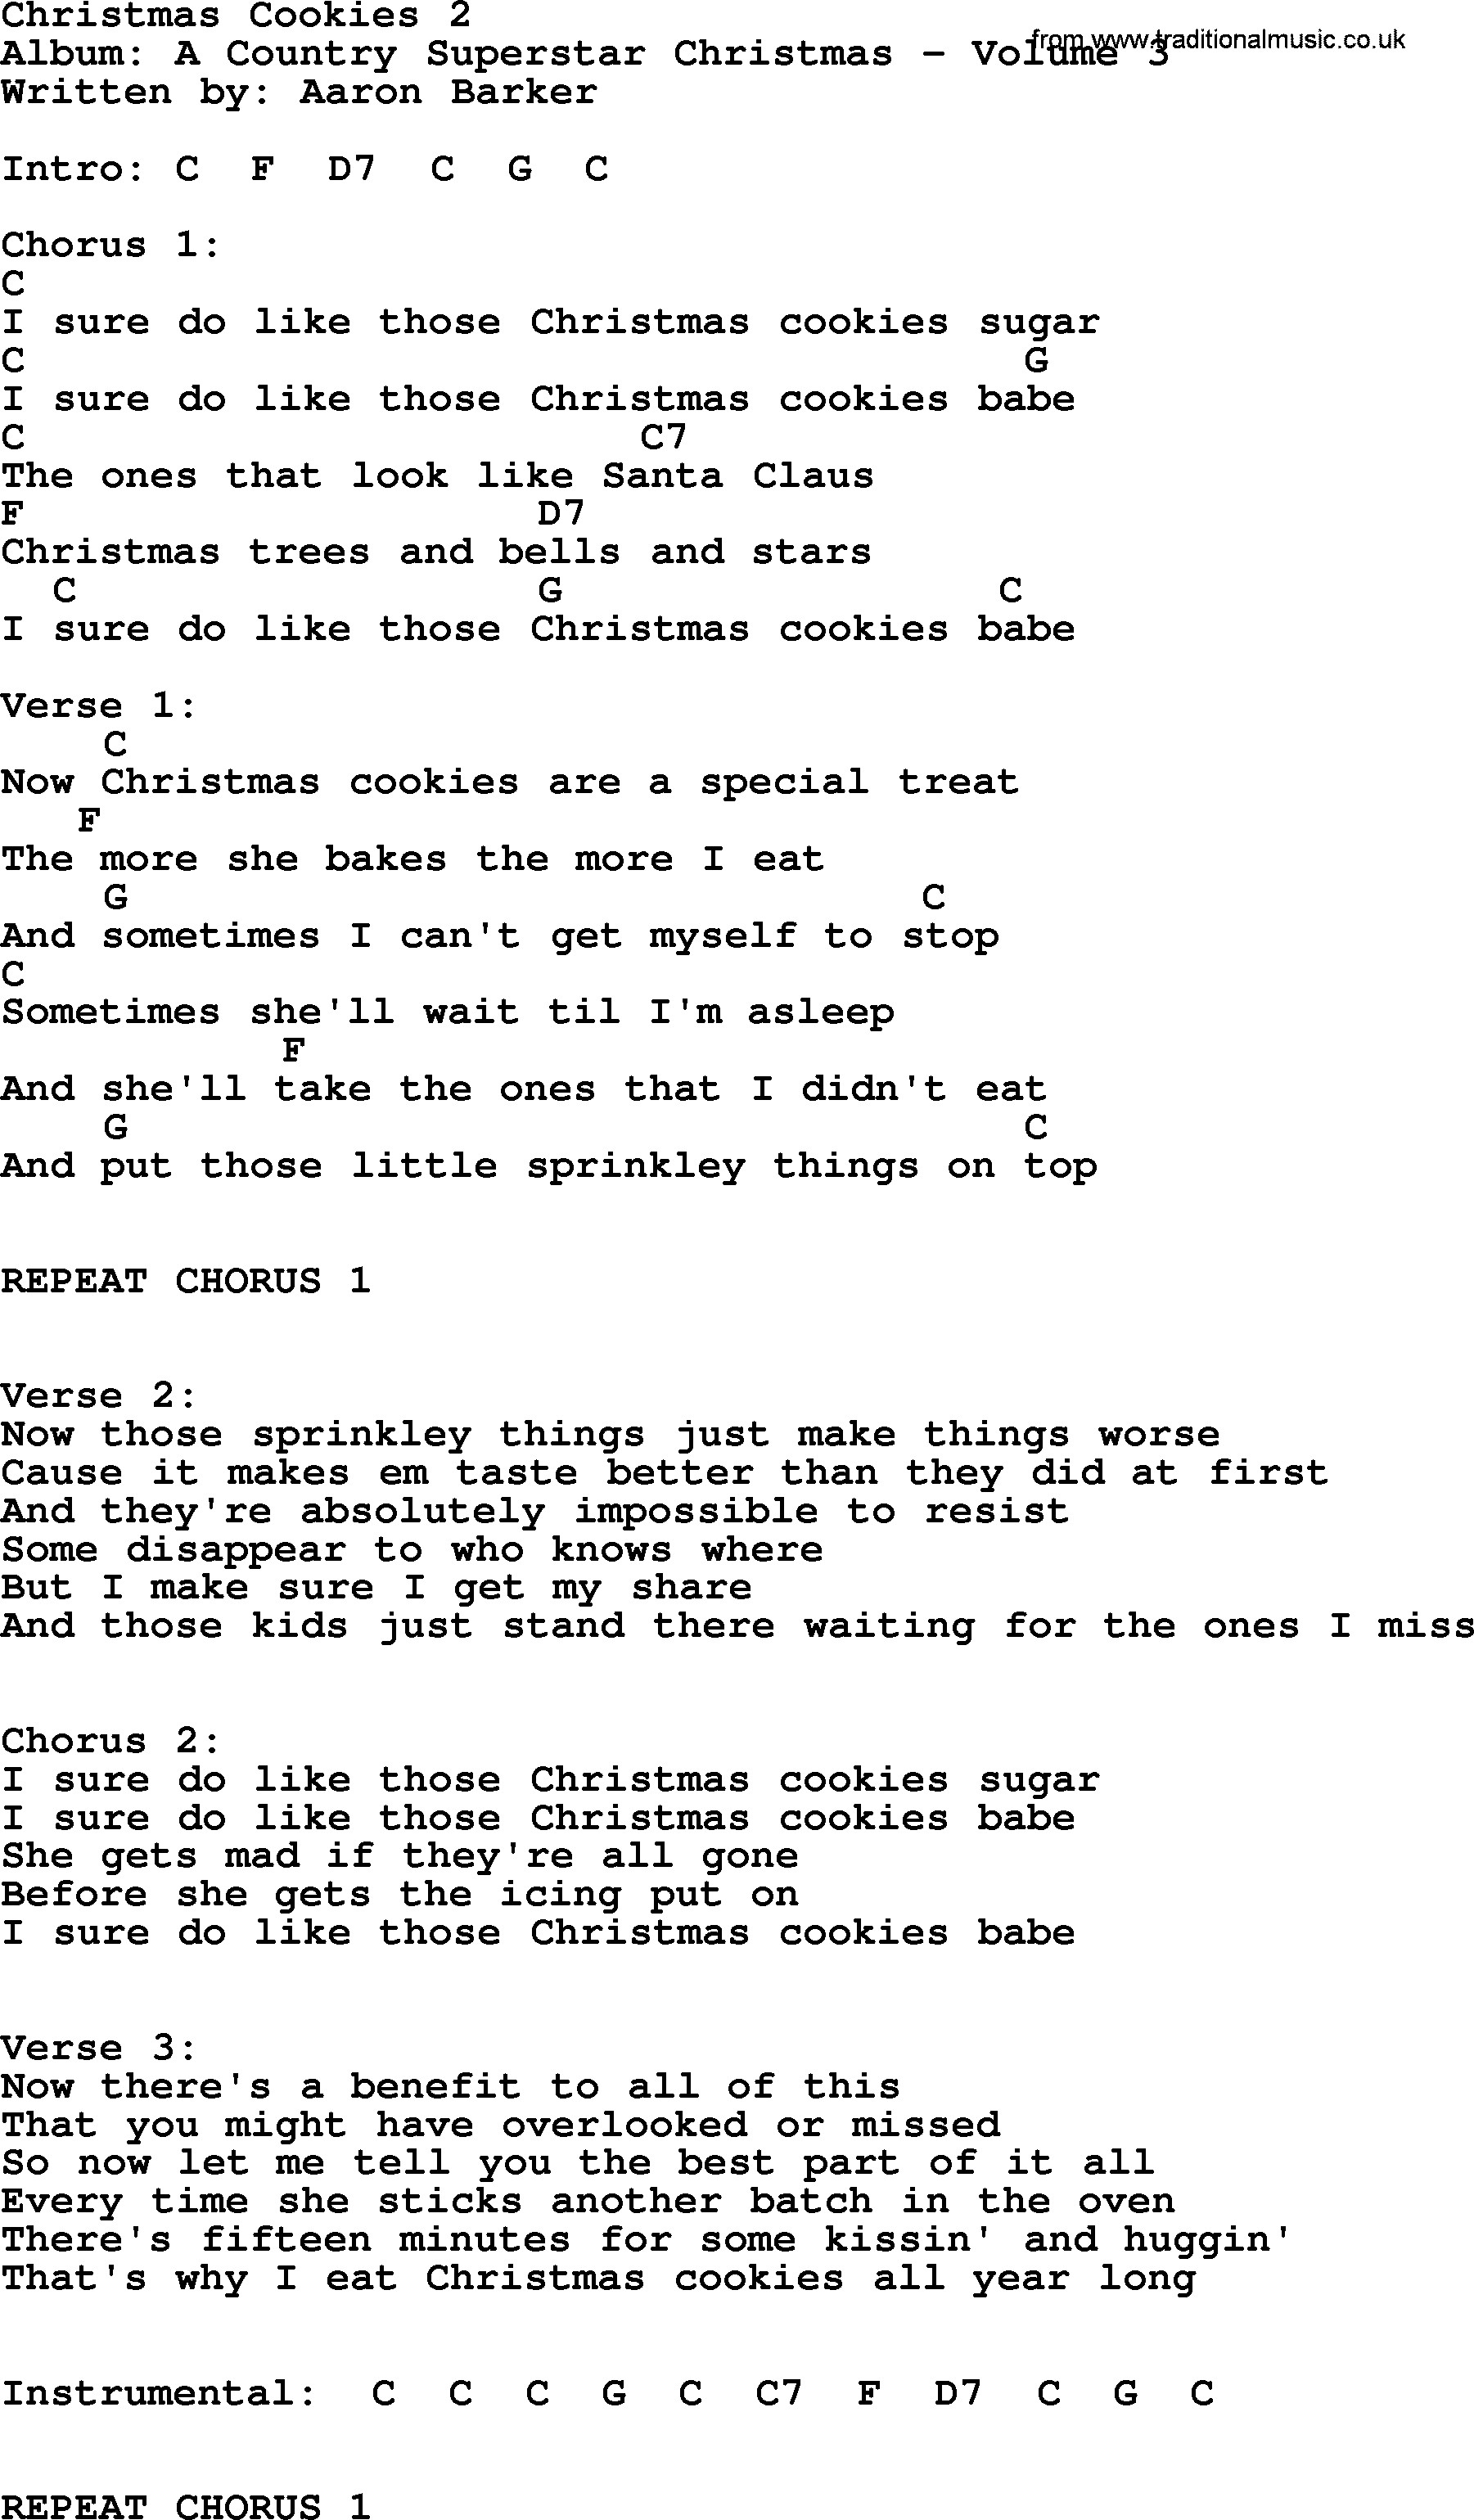 Christmas Cookies Song Lyrics
 Christmas Cookies 2 by George Strait lyrics and chords